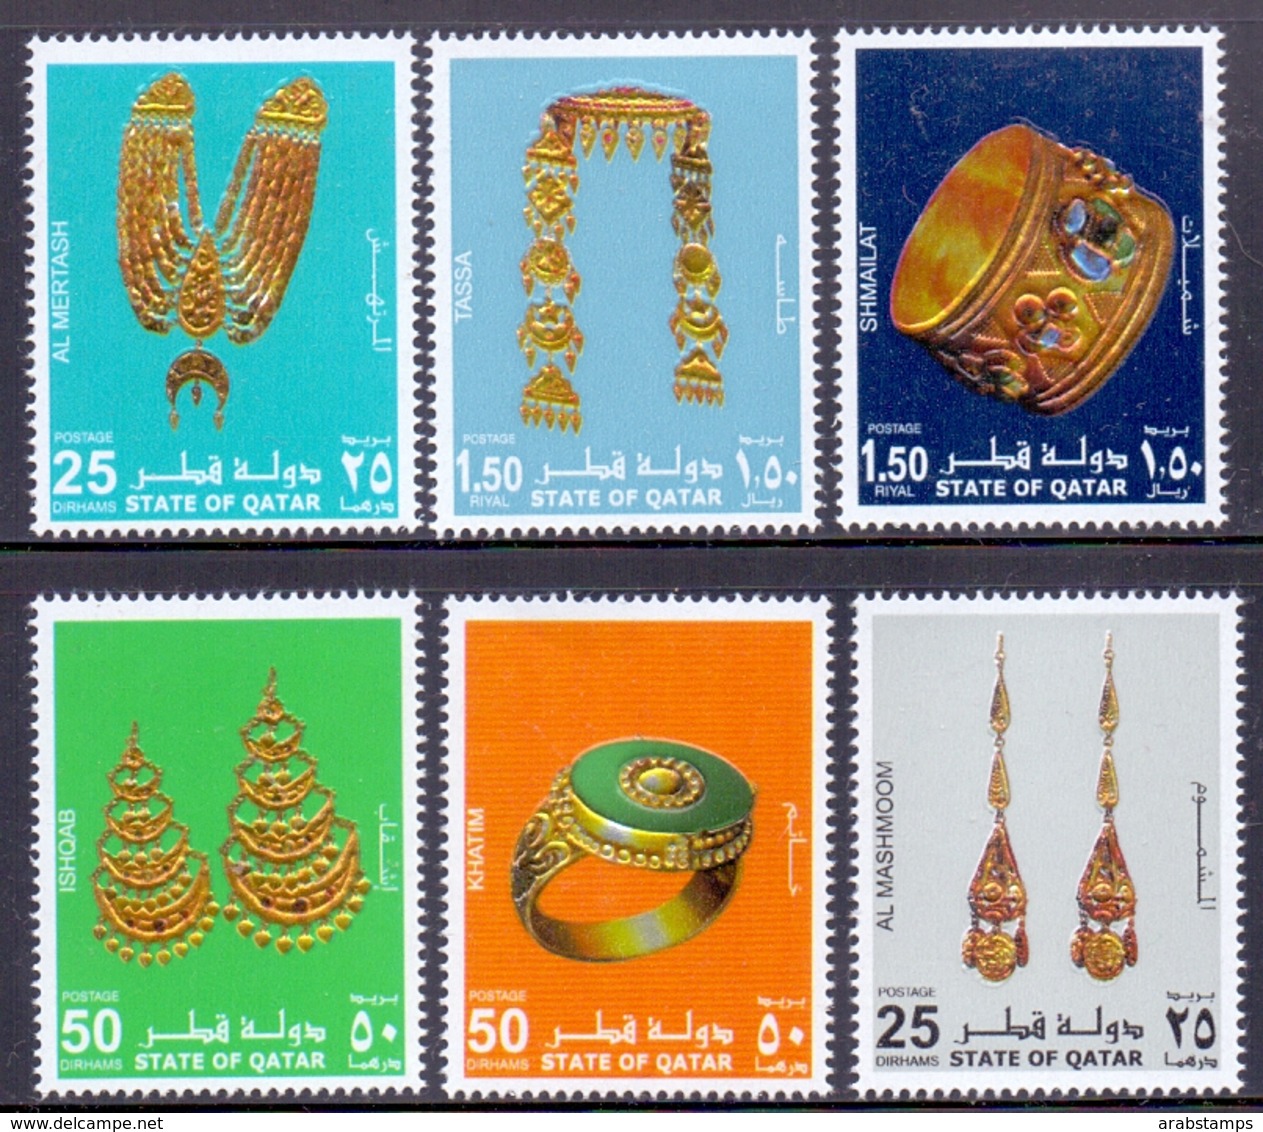 2003 QATAR Women's Ornaments Complete Sets 6 Values MNH - Qatar